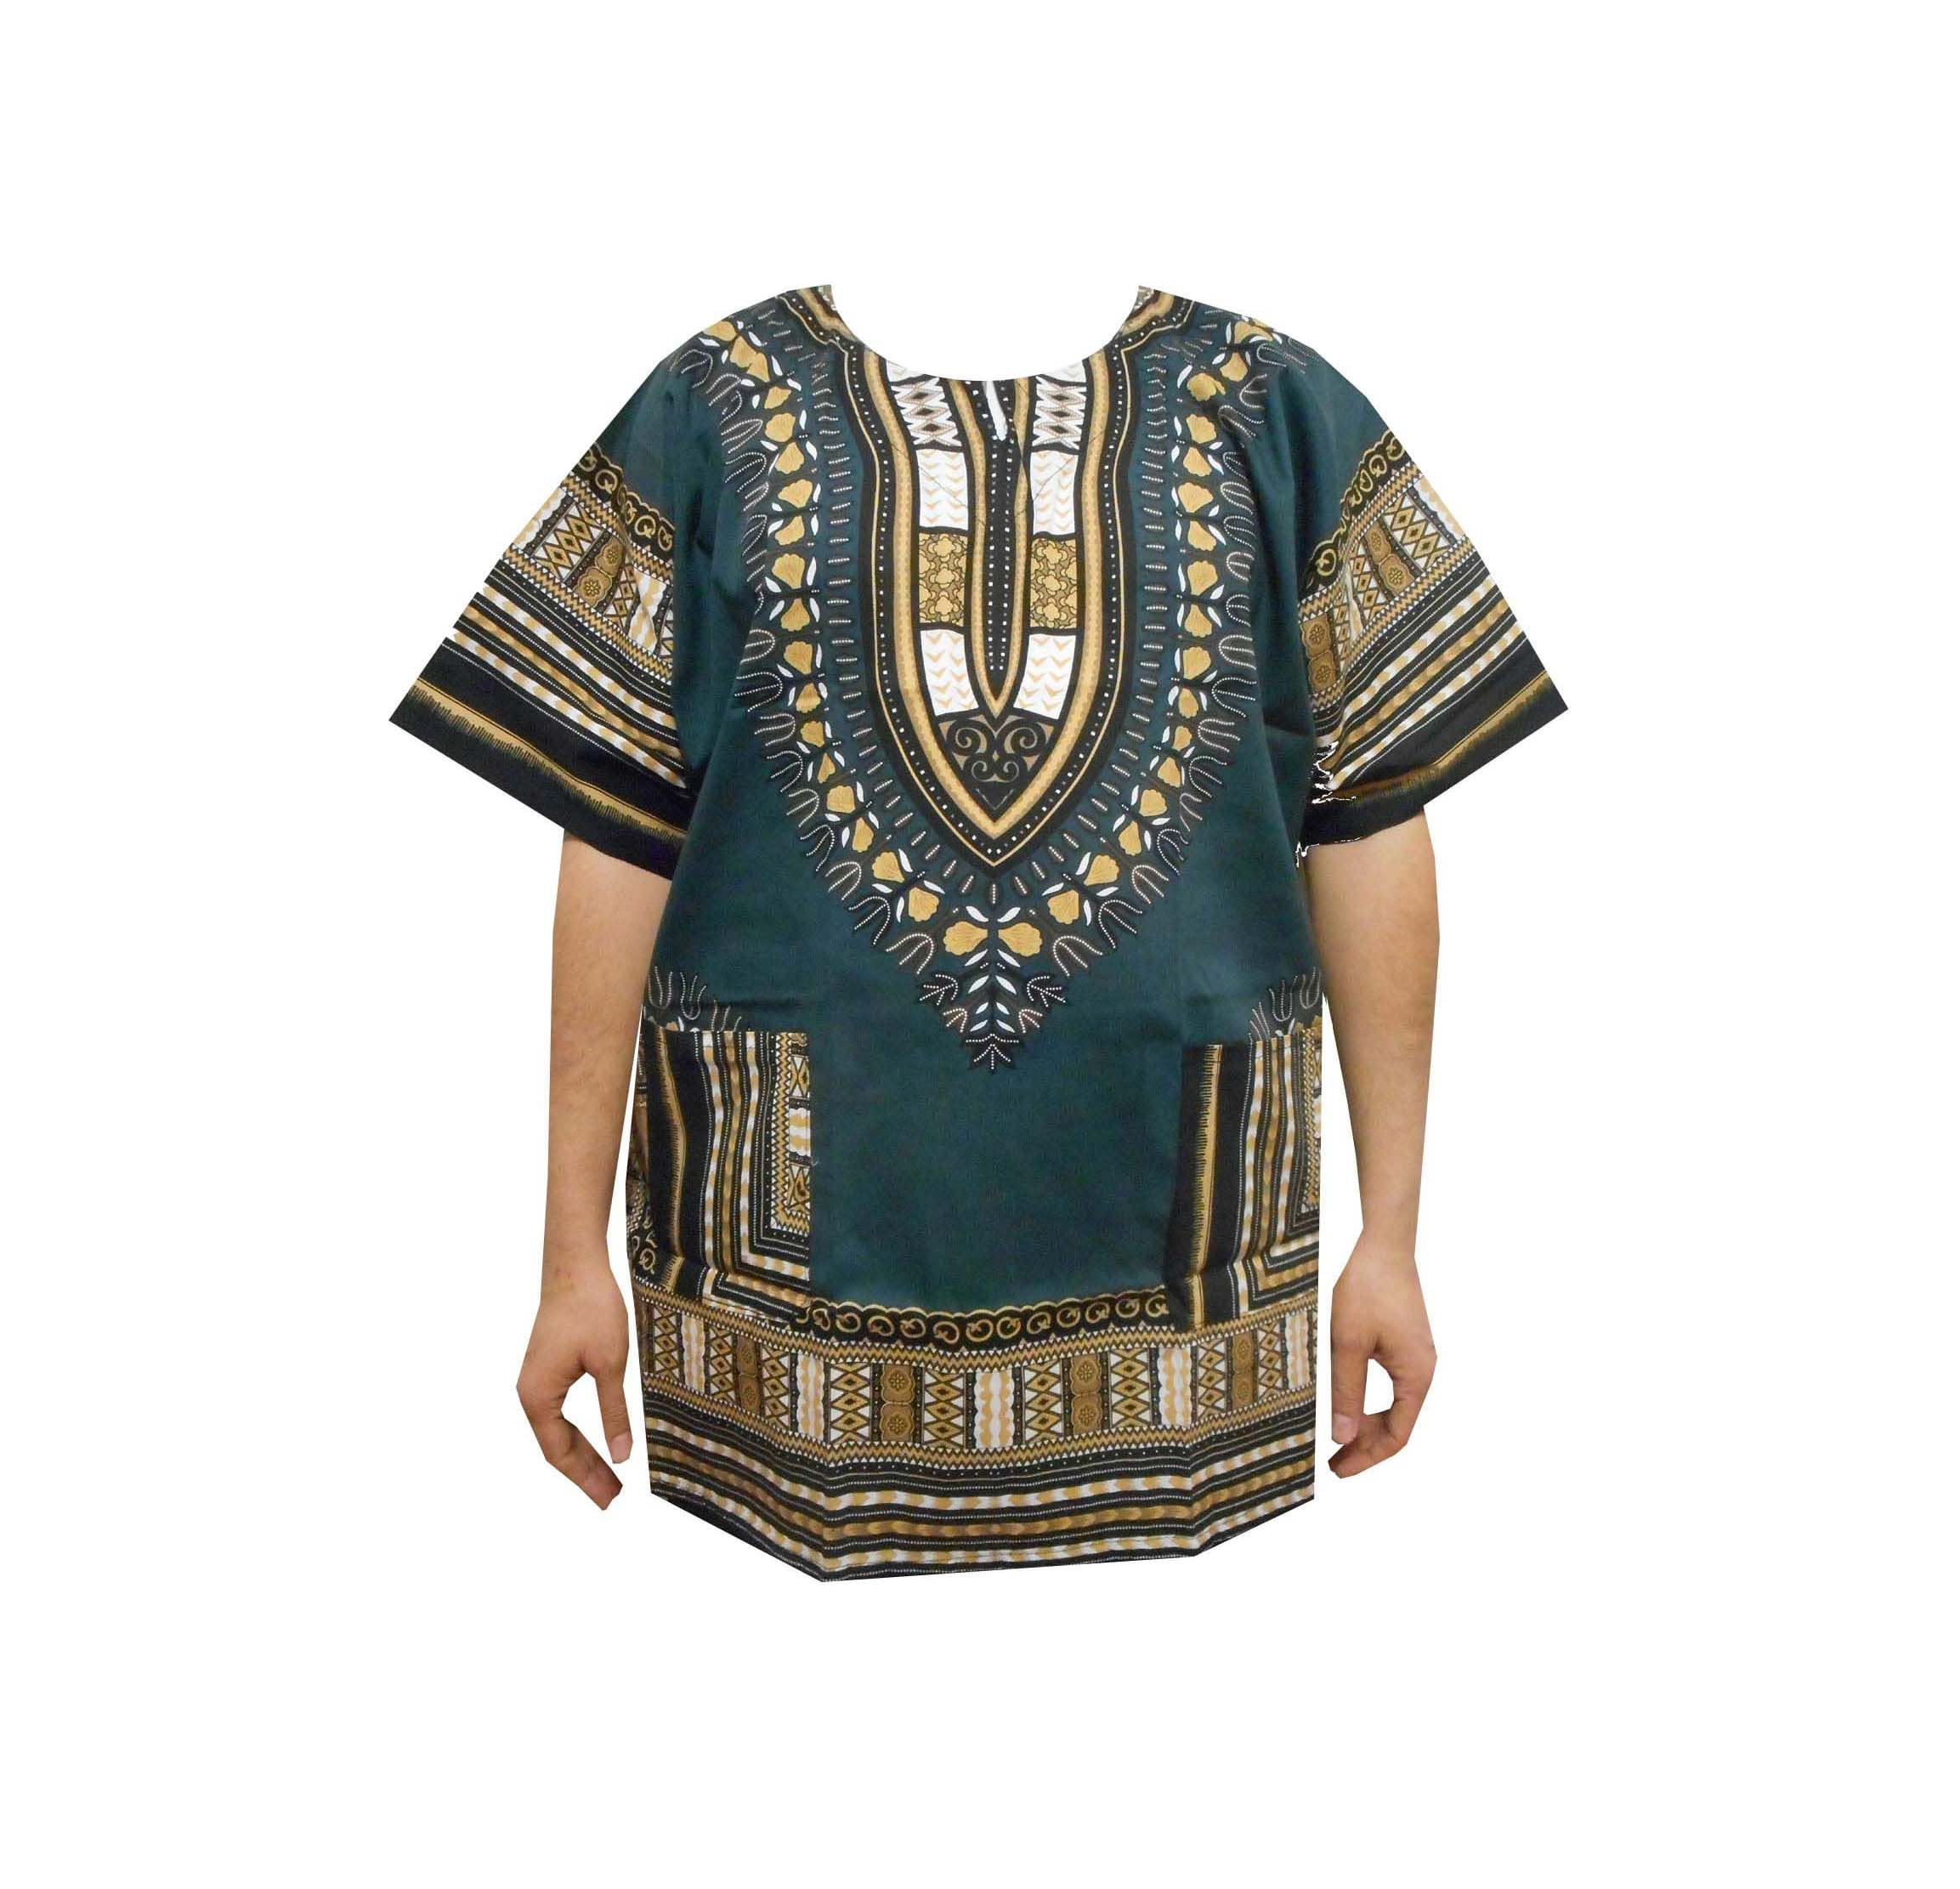 Men Women African Dashiki Top Shirt Traditional Blouse Green Plus Size 1X 2X 3X 